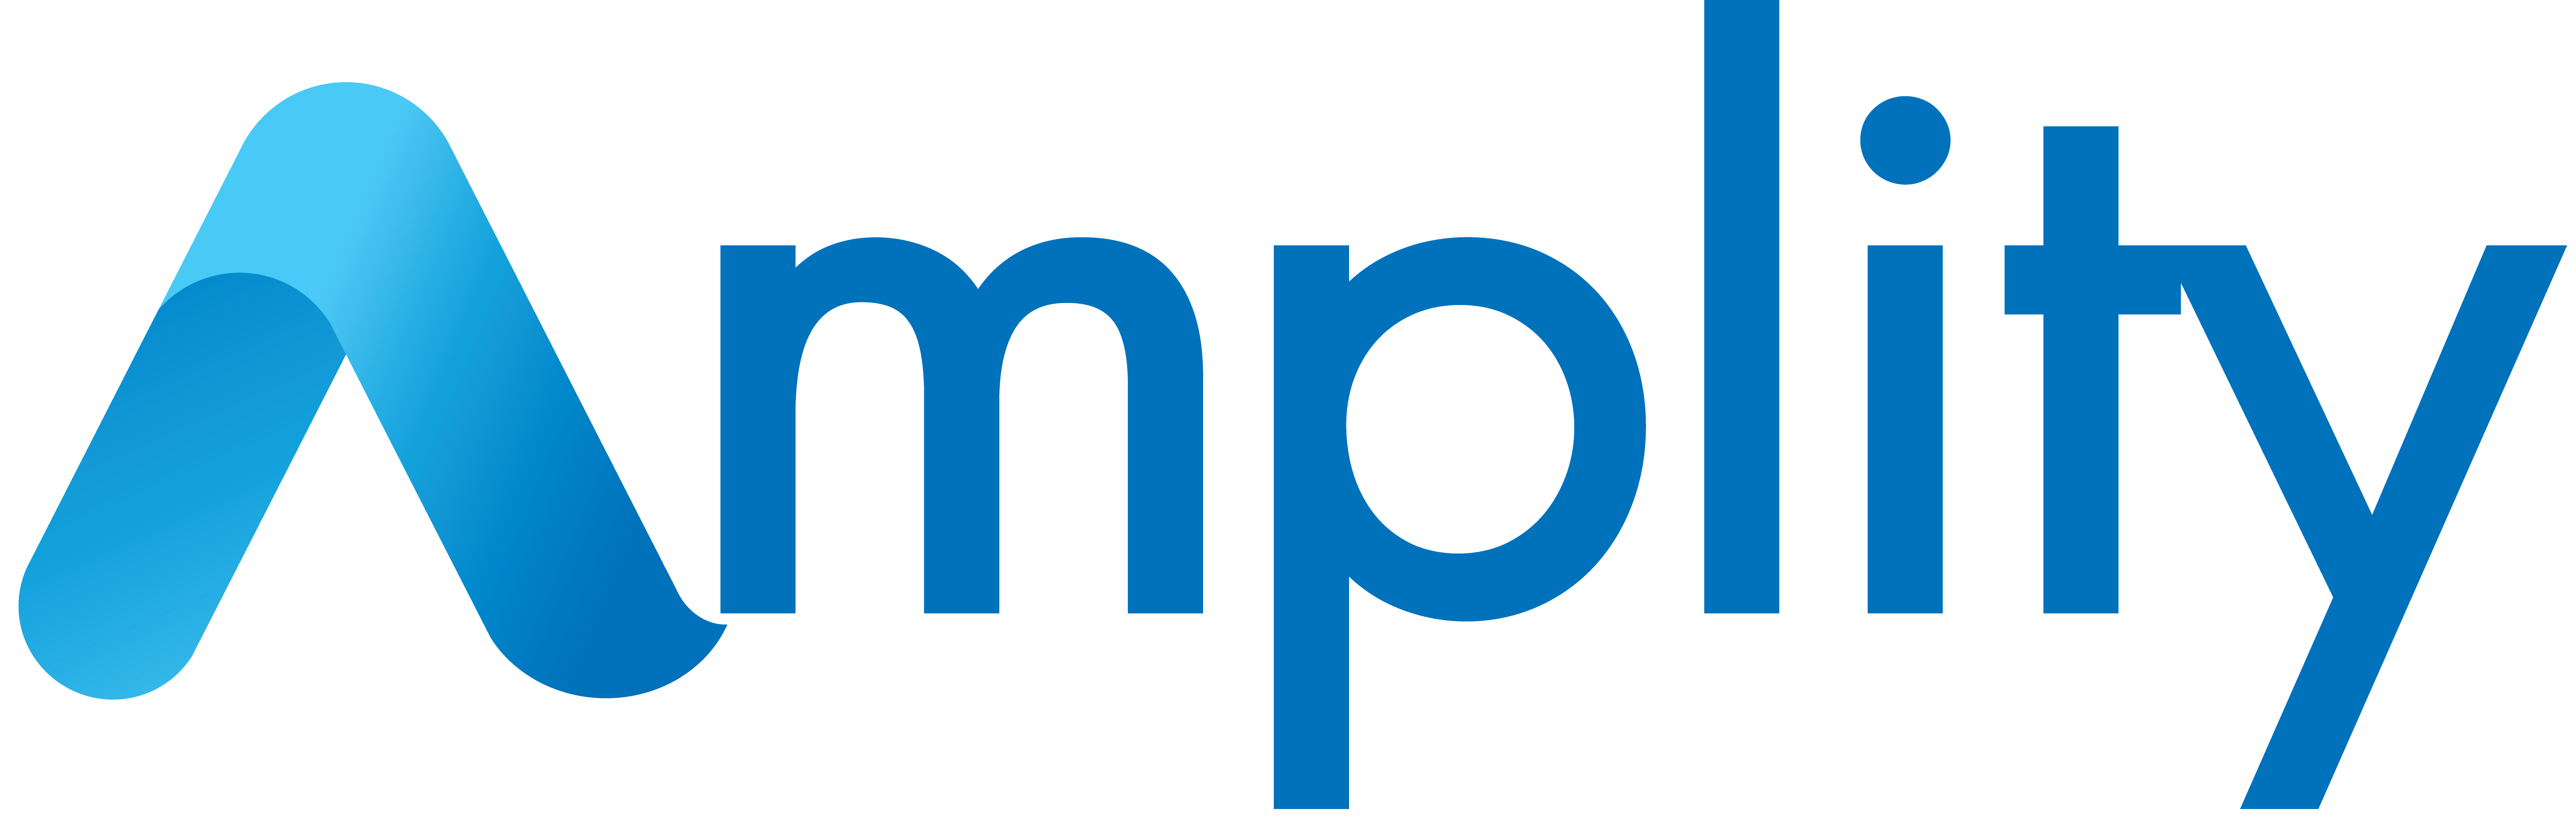 Amplity Logo